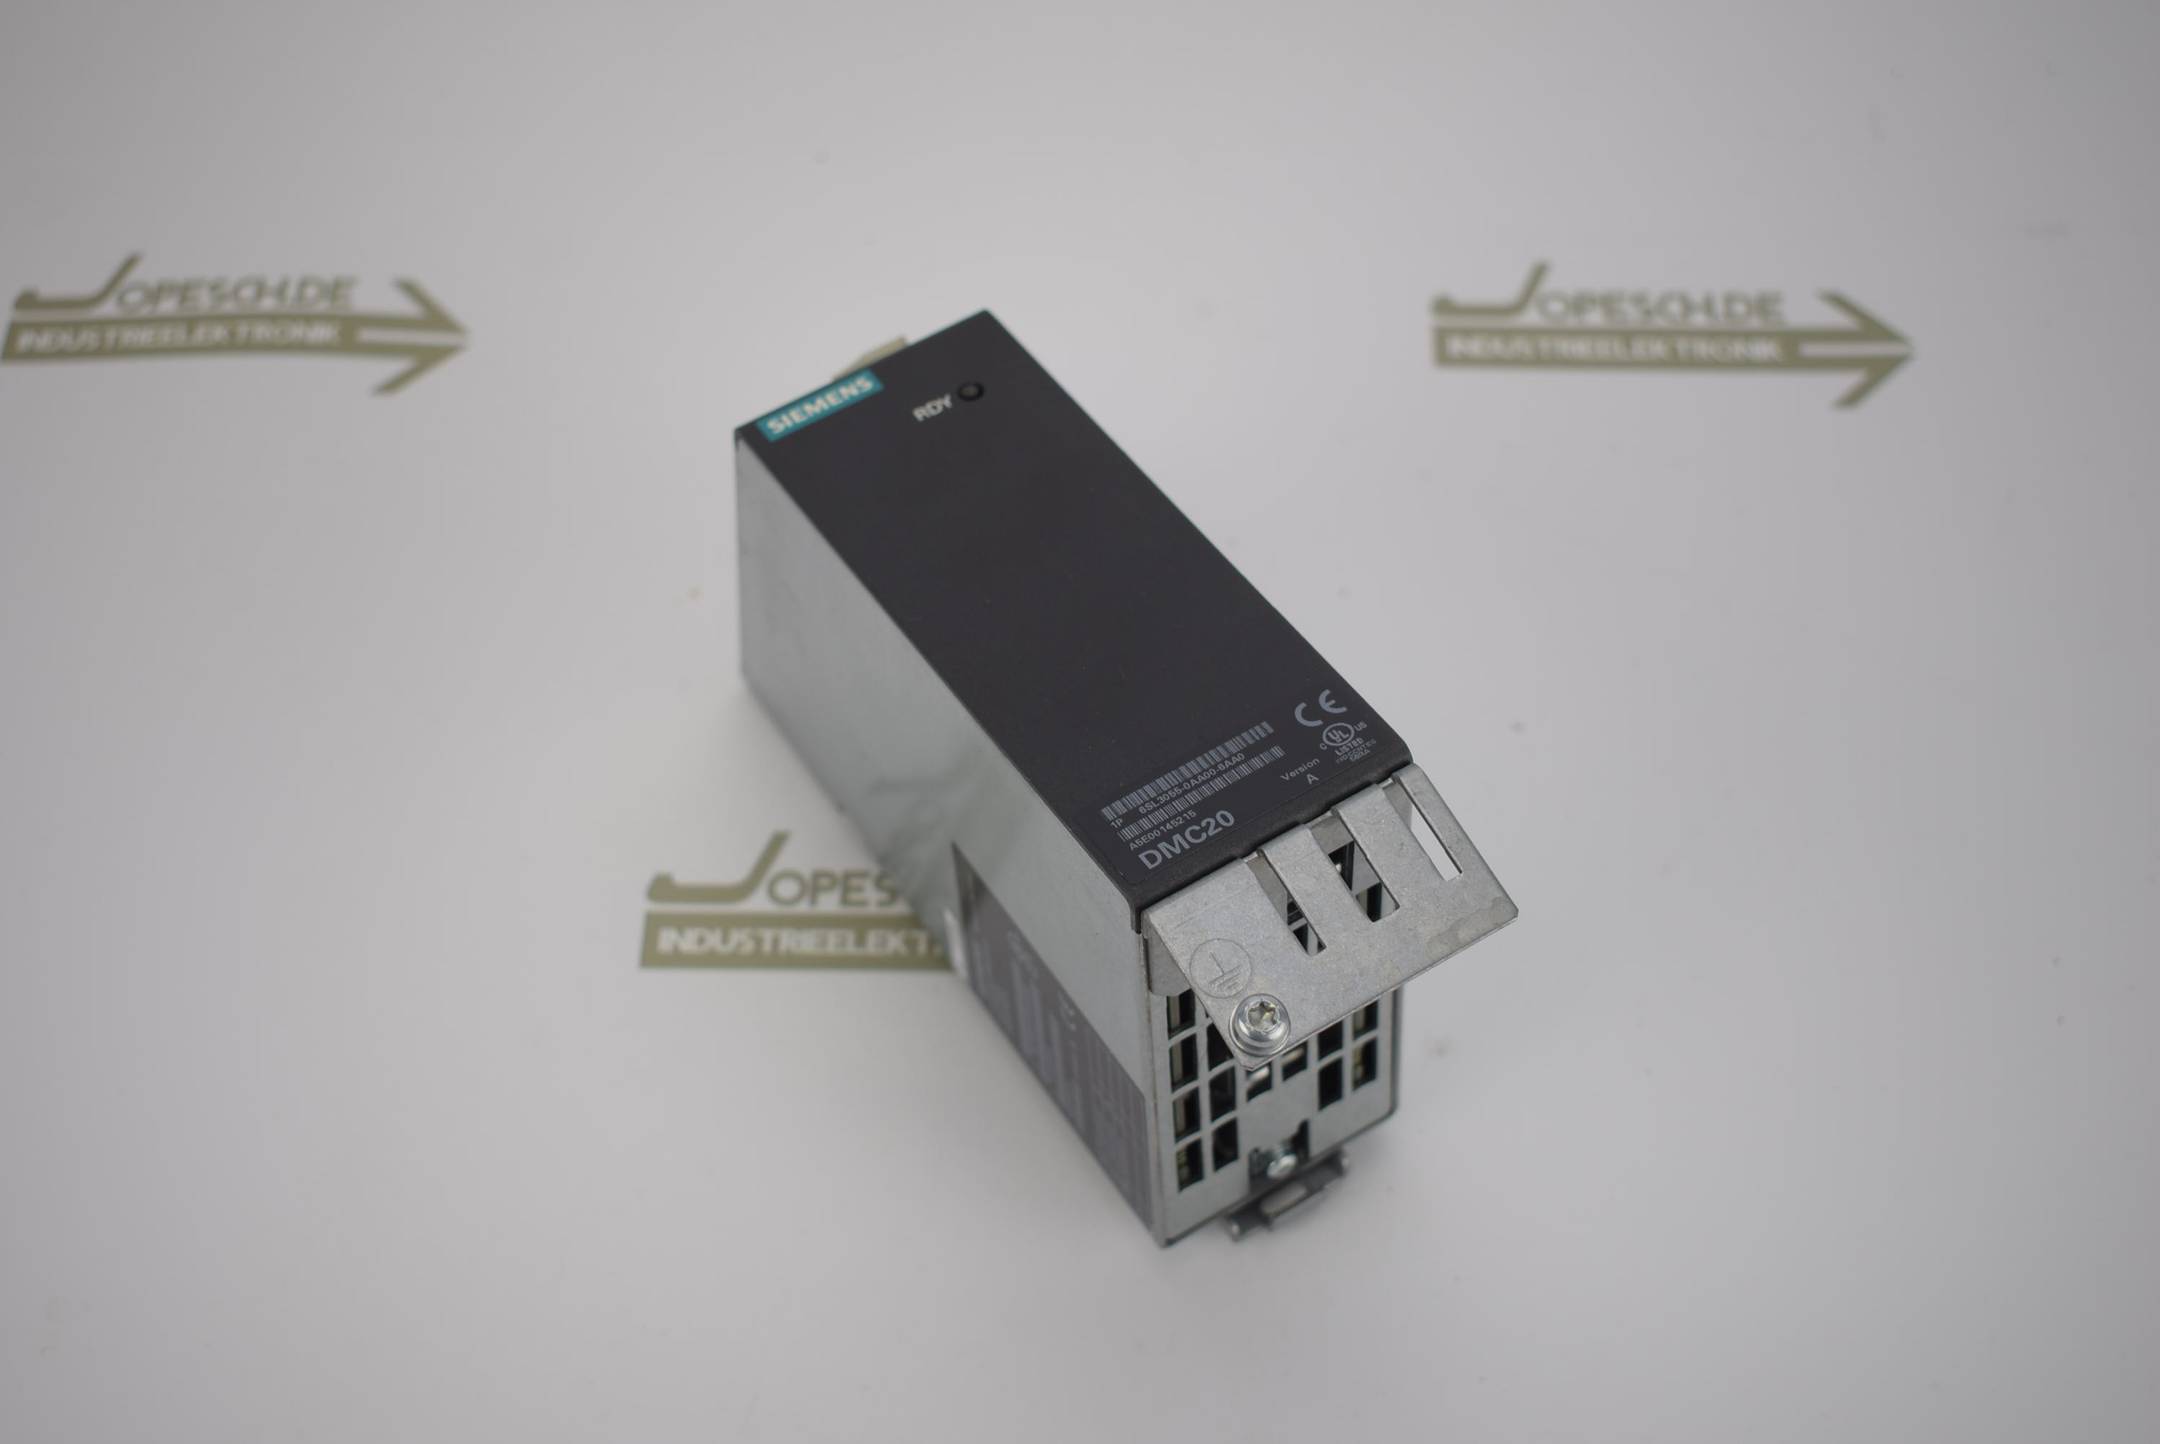 Siemens sinamics Drive-CLiQ Hub DMC20 6SL3055-0AA00-6AA0 ( 6SL3 055-0AA00-6AA0 ) Ver. A